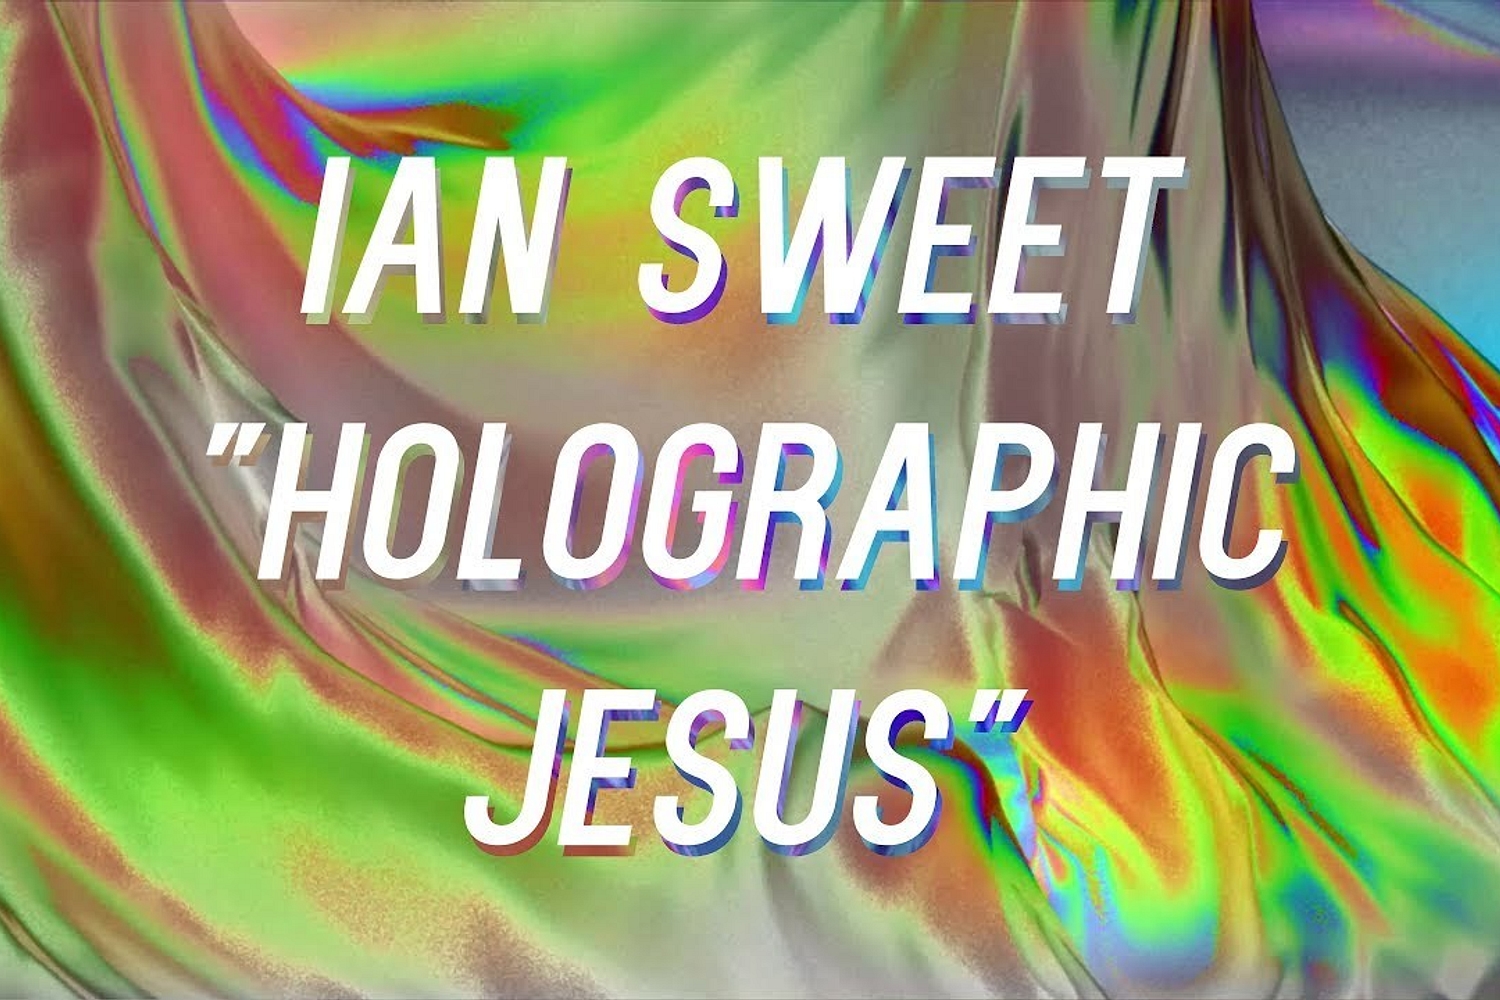 Watch IAN SWEET’s trippy new ‘Holographic Jesus’ video